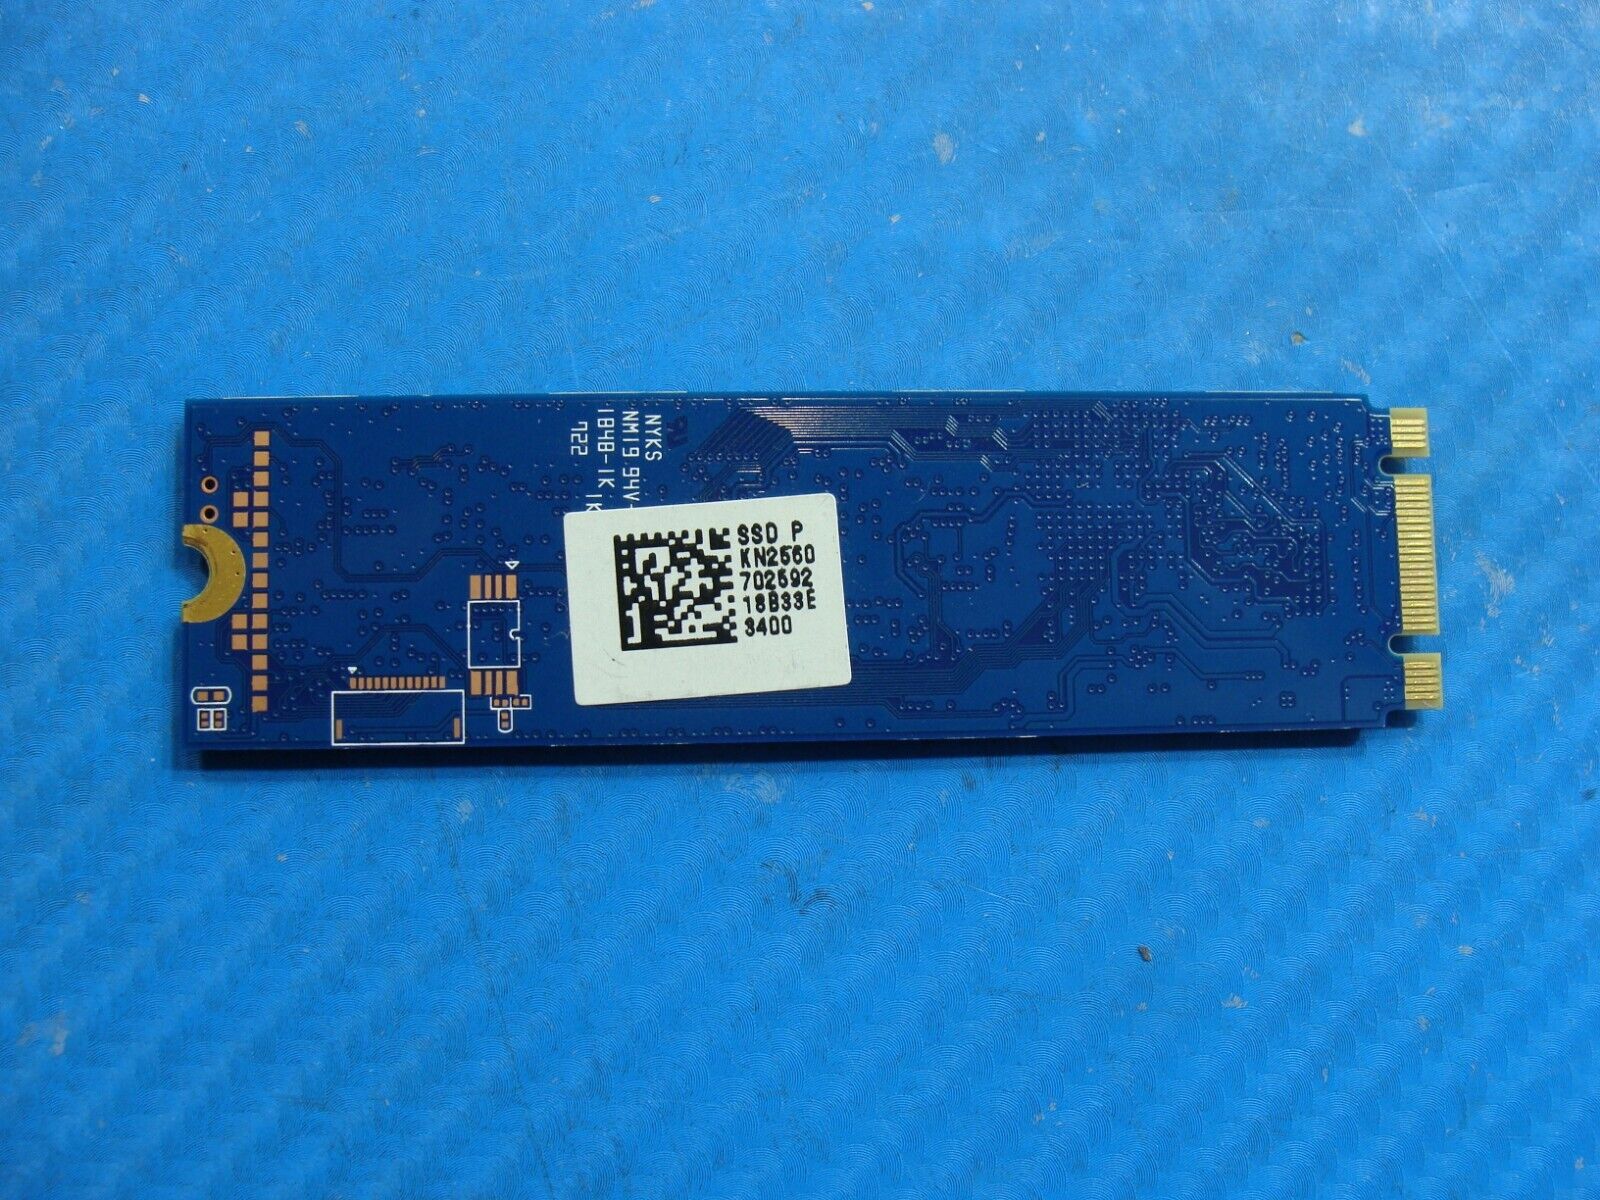 Acer Nitro 5 AN515-53 Kingston 256GB SSD Solid State Drive RBU-SNS8154P3/256GJ1